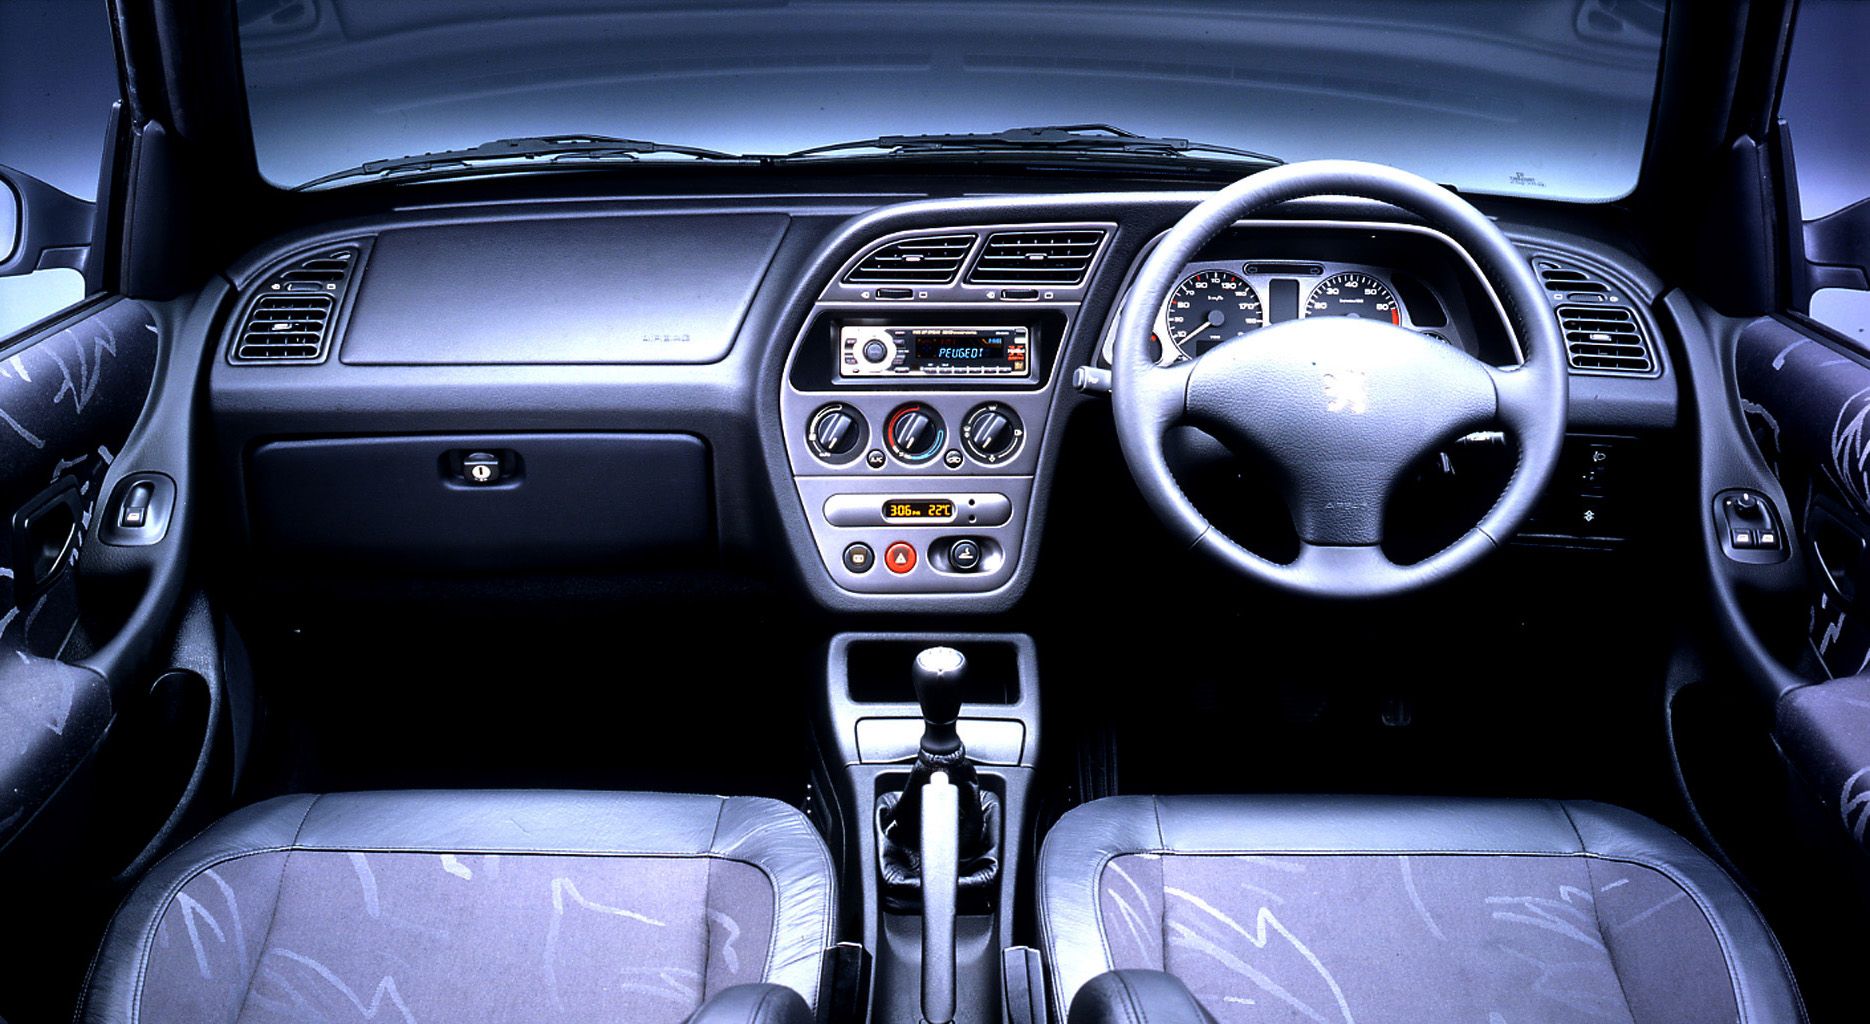 Peugeot 306 interior - Cockpit